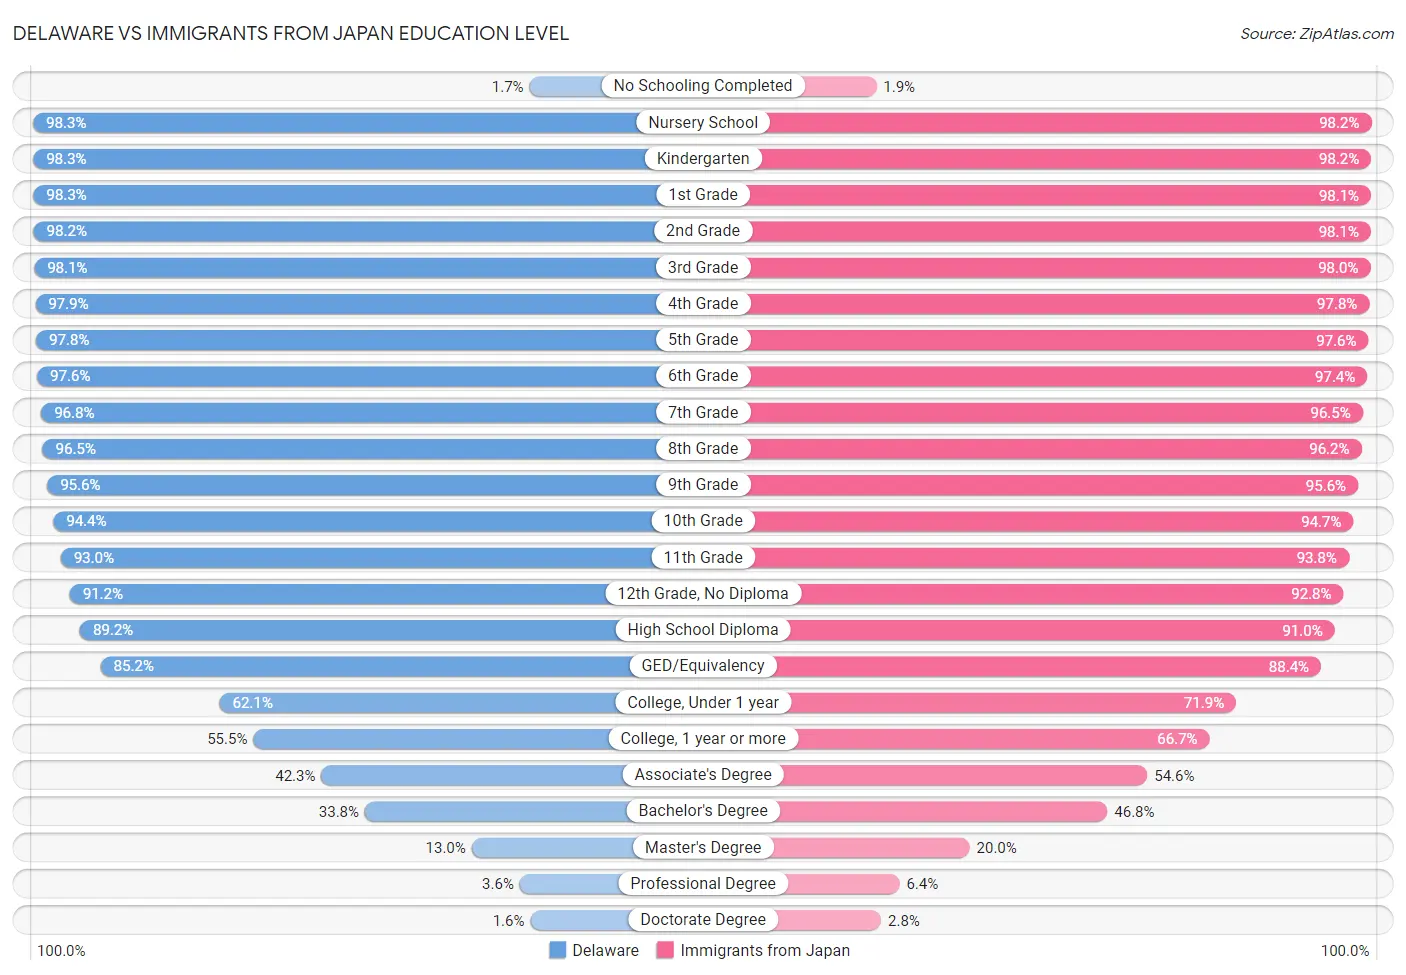 Delaware vs Immigrants from Japan Education Level